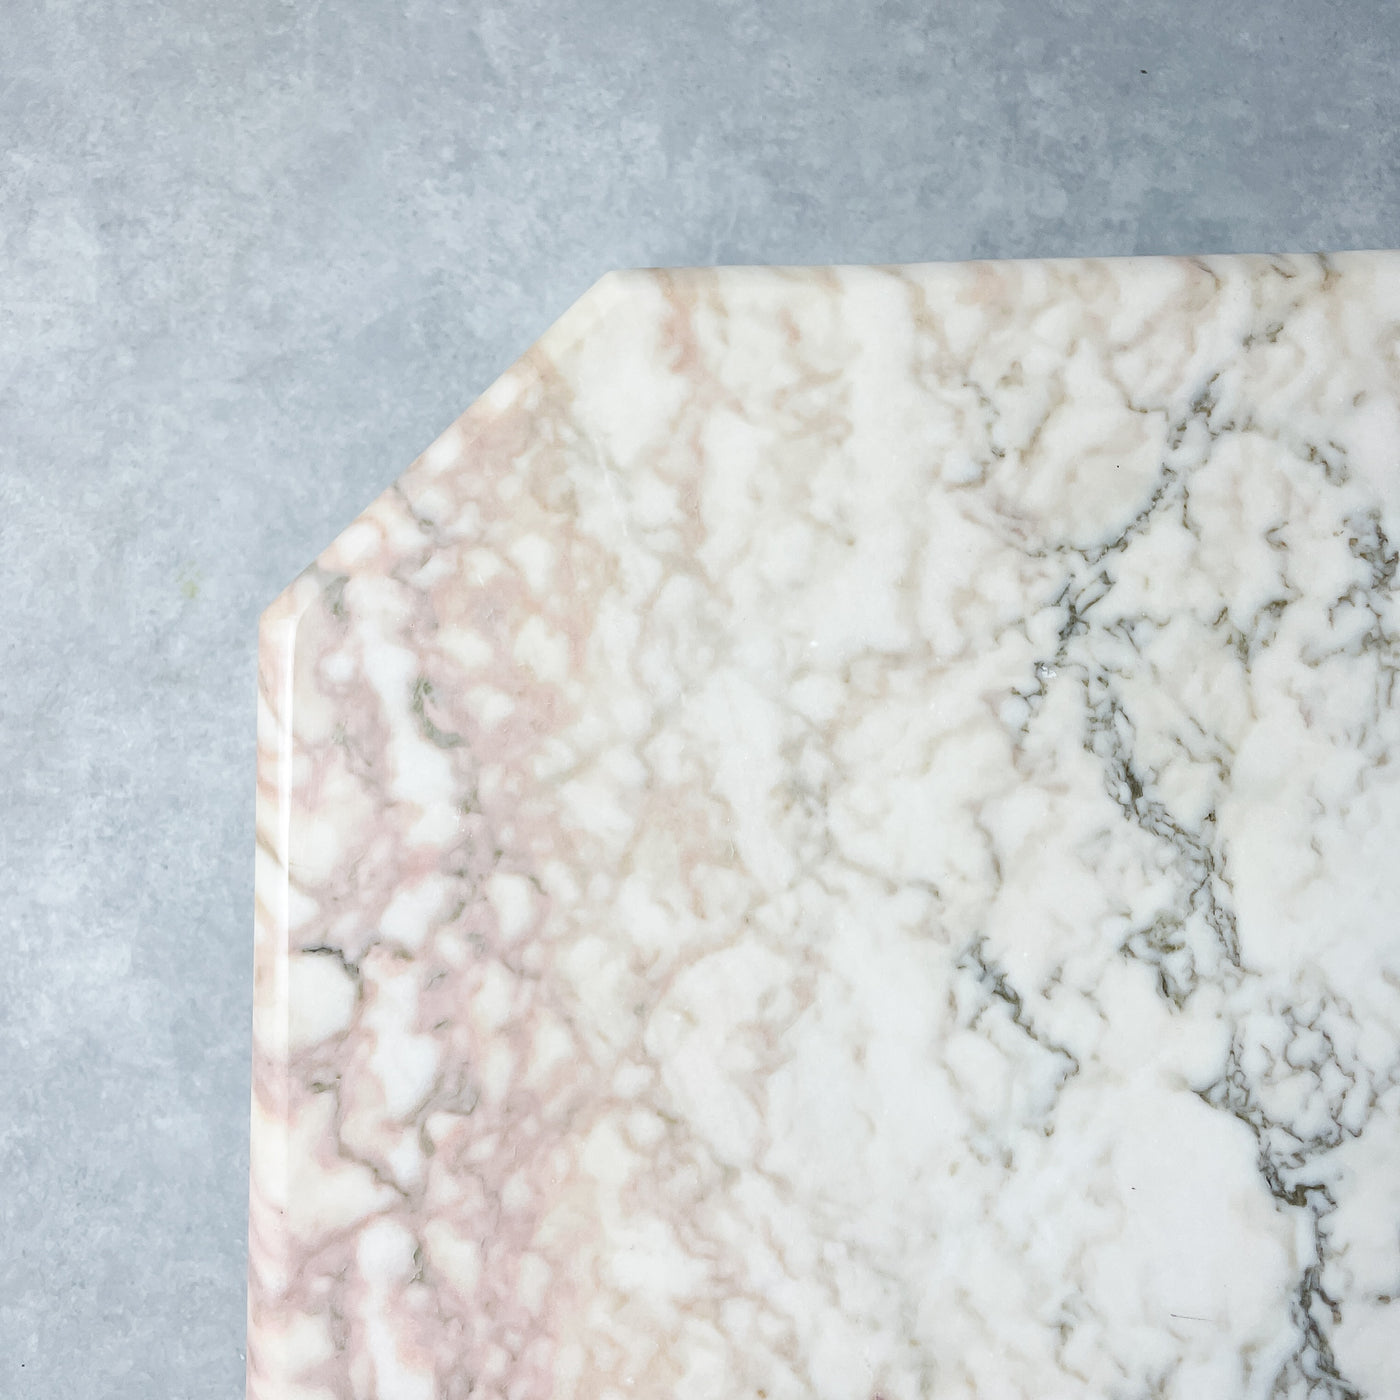 Soffbord i marmor - beige/grå/rosa